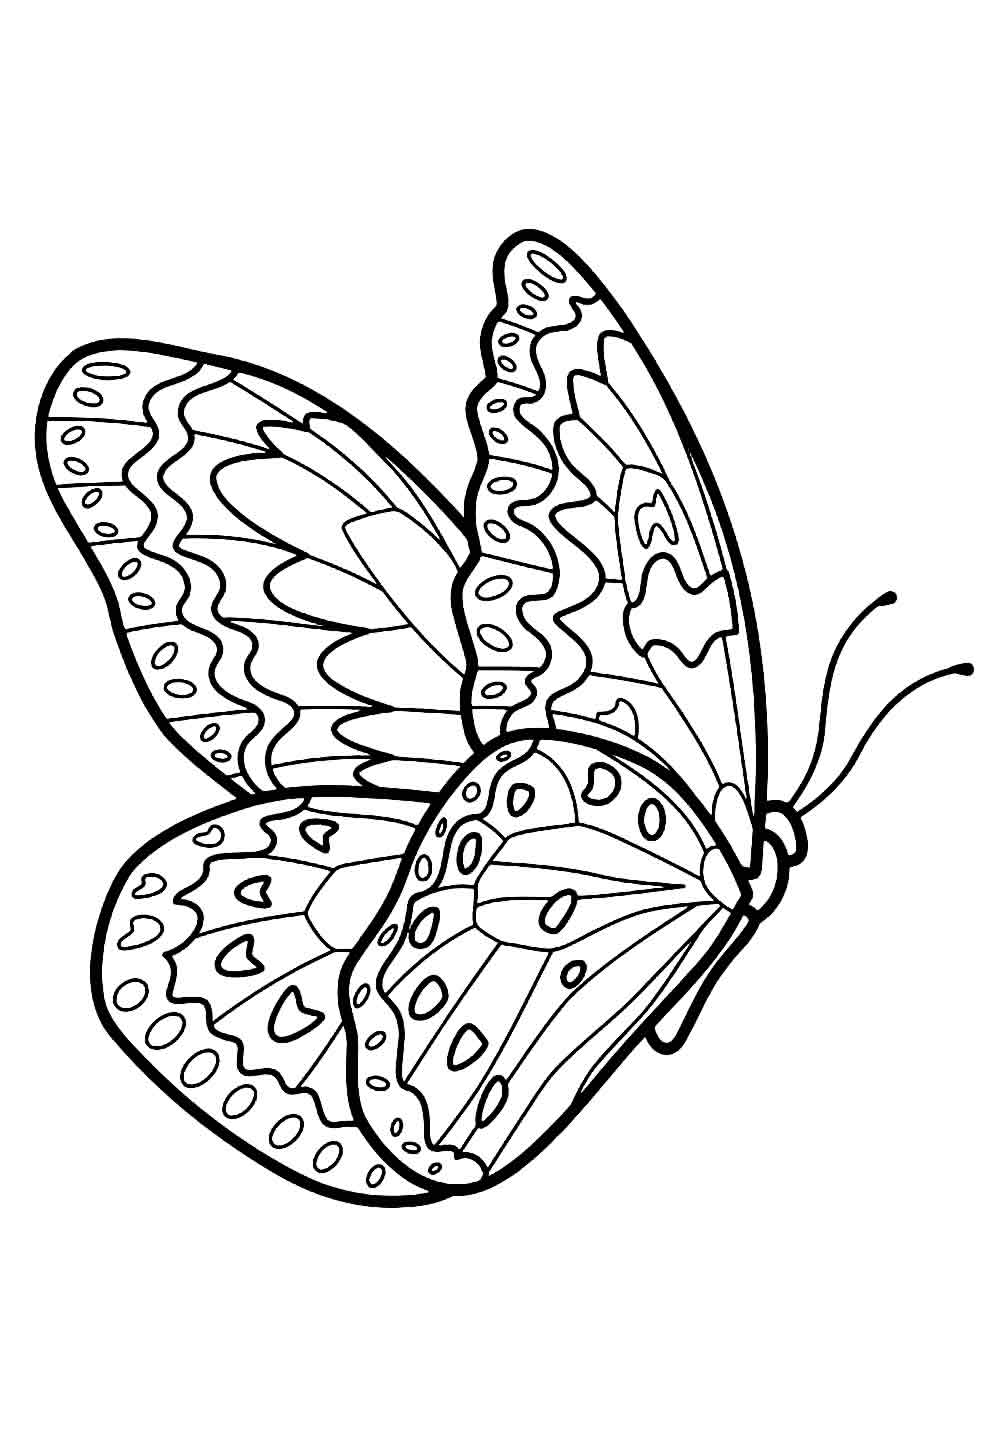 Desenho simples de borboleta